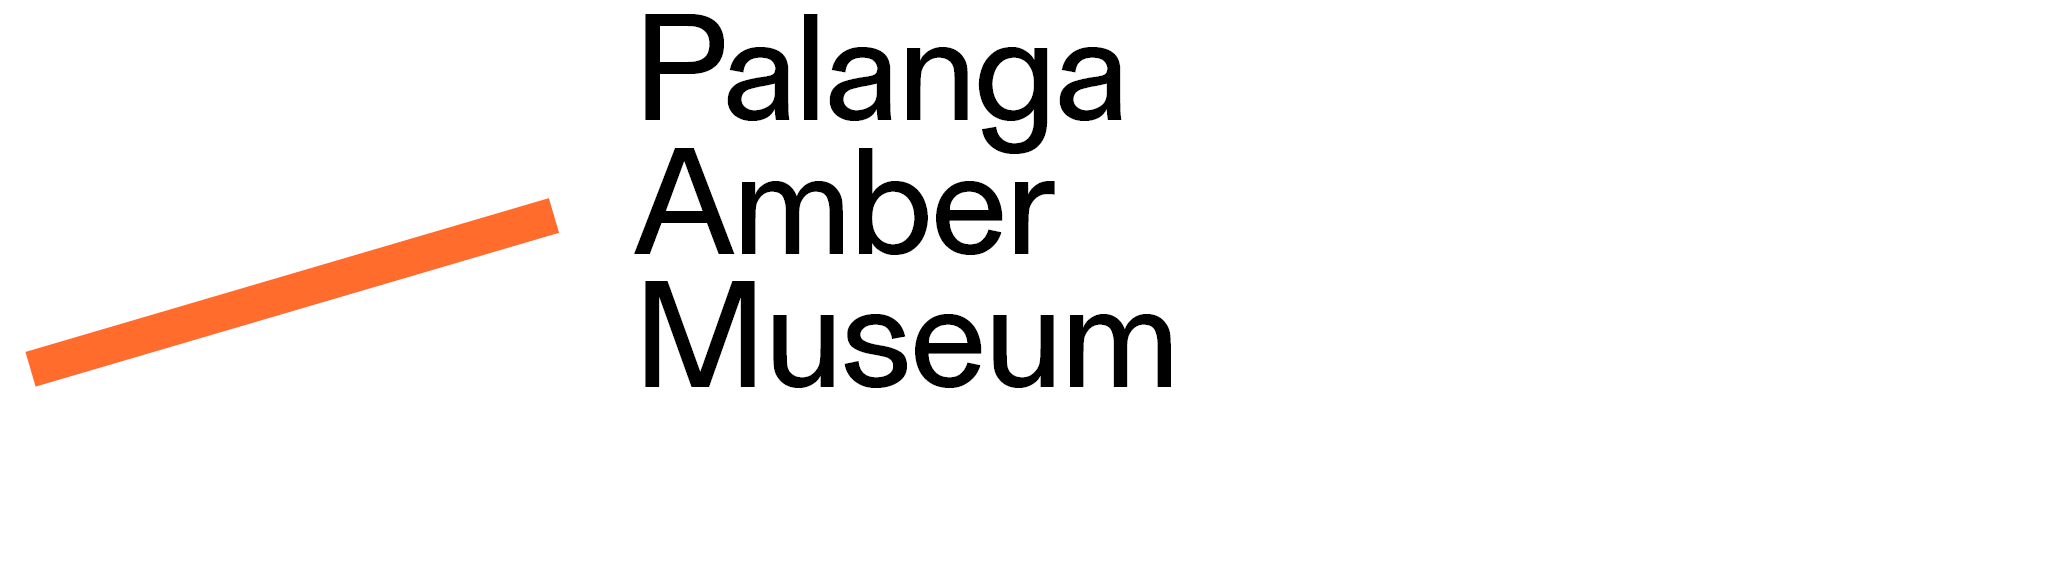 Palanga Amber Museum